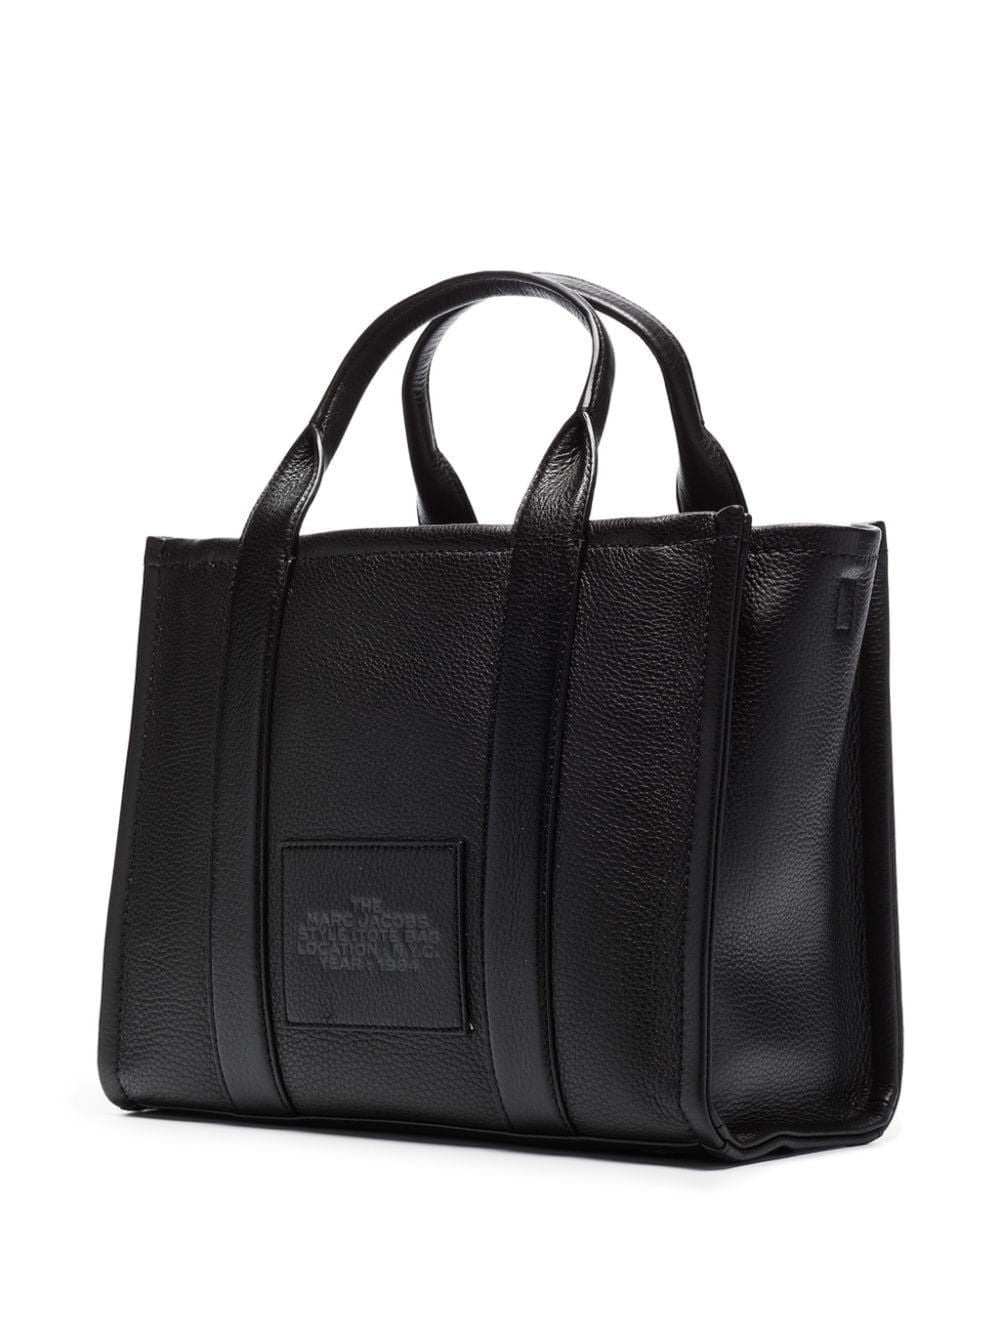 MARC JACOBS Women's Elegant Black Leather Medium Tote Handbag for Fall/Winter 2024